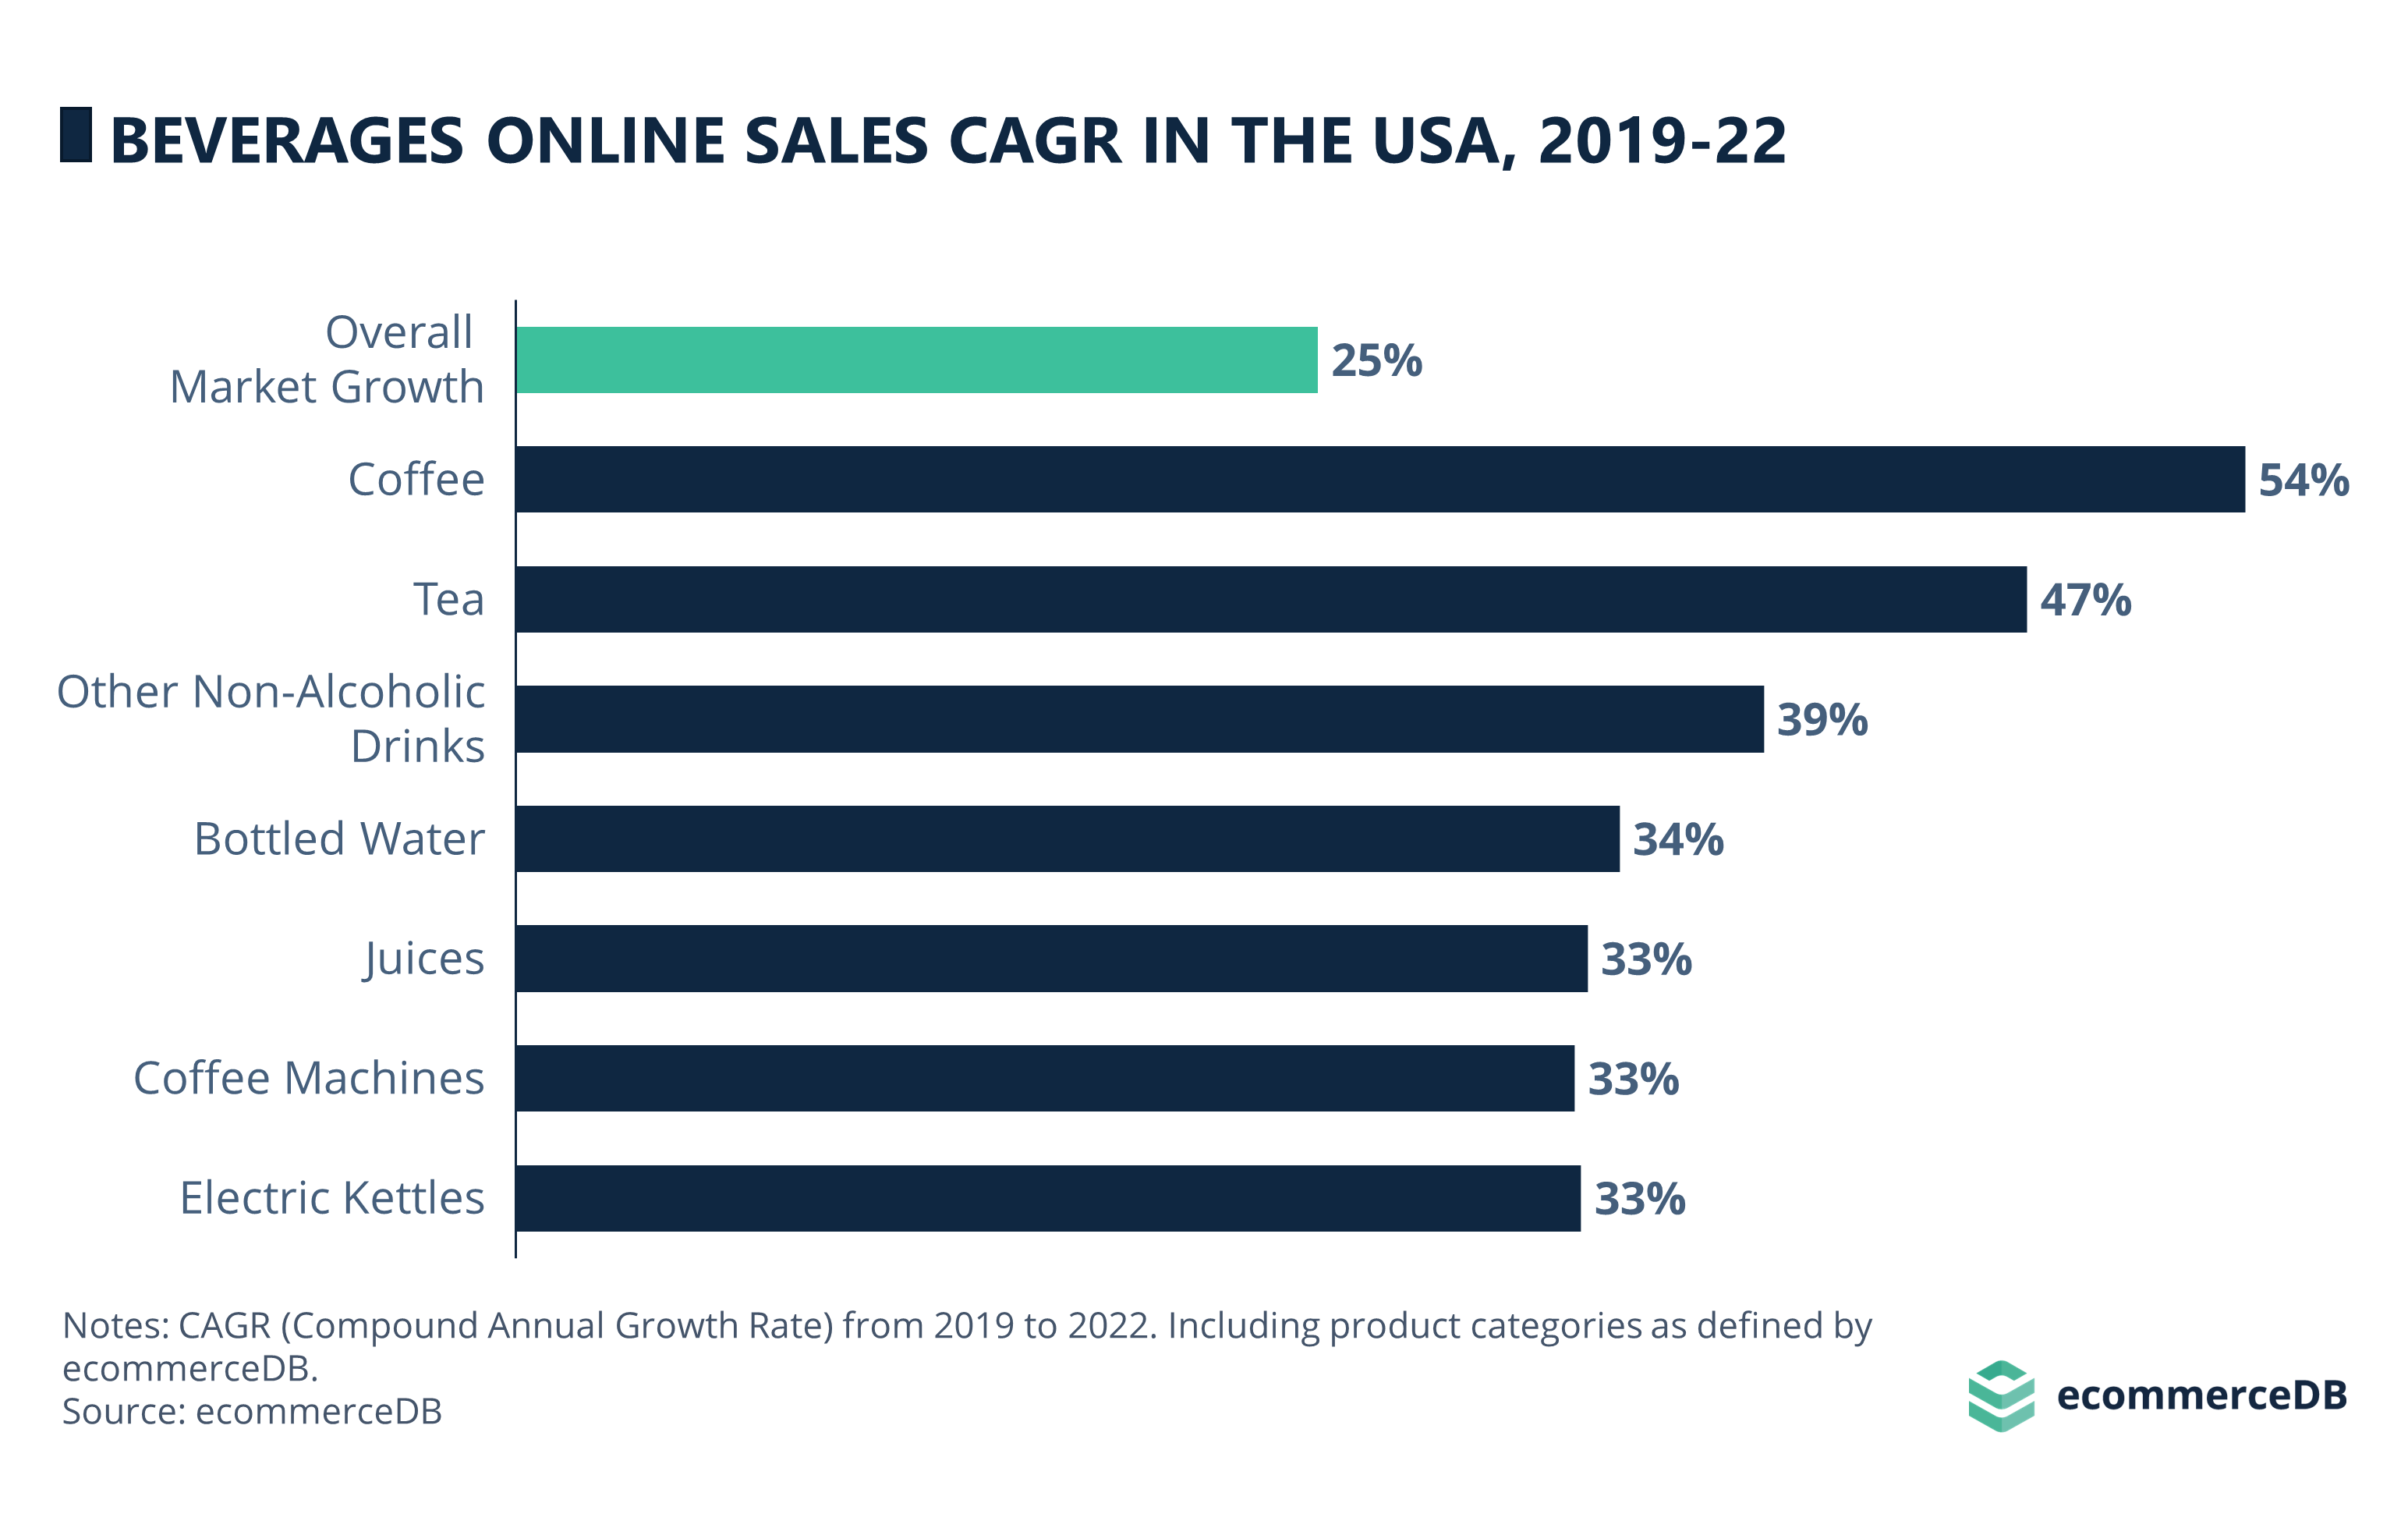 Beverages Online Sales CAGR (2019-2022) in the U.S.